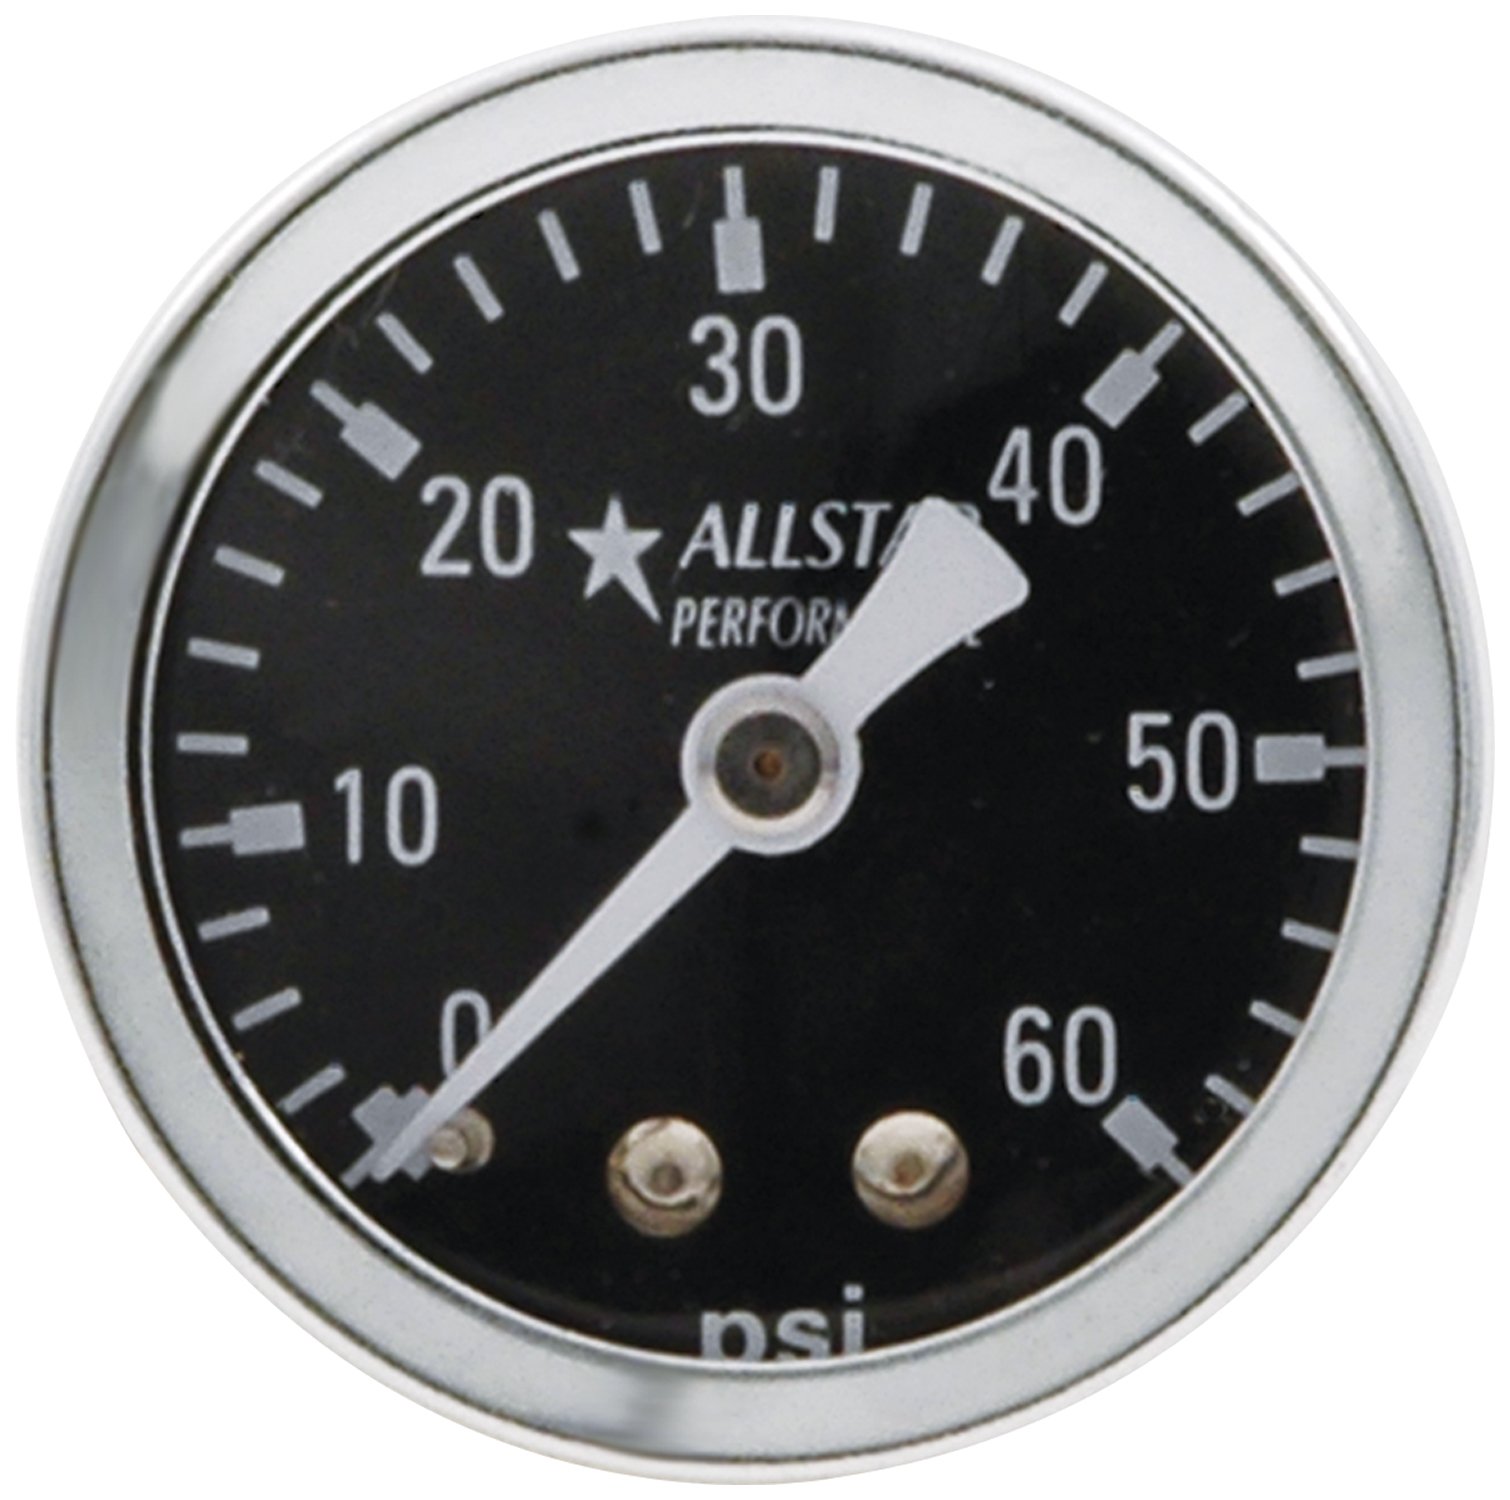 Allstar Performance ALL80214 0-60 PSI 1-1/2" Dry Type Shockproof Pressure Gauge